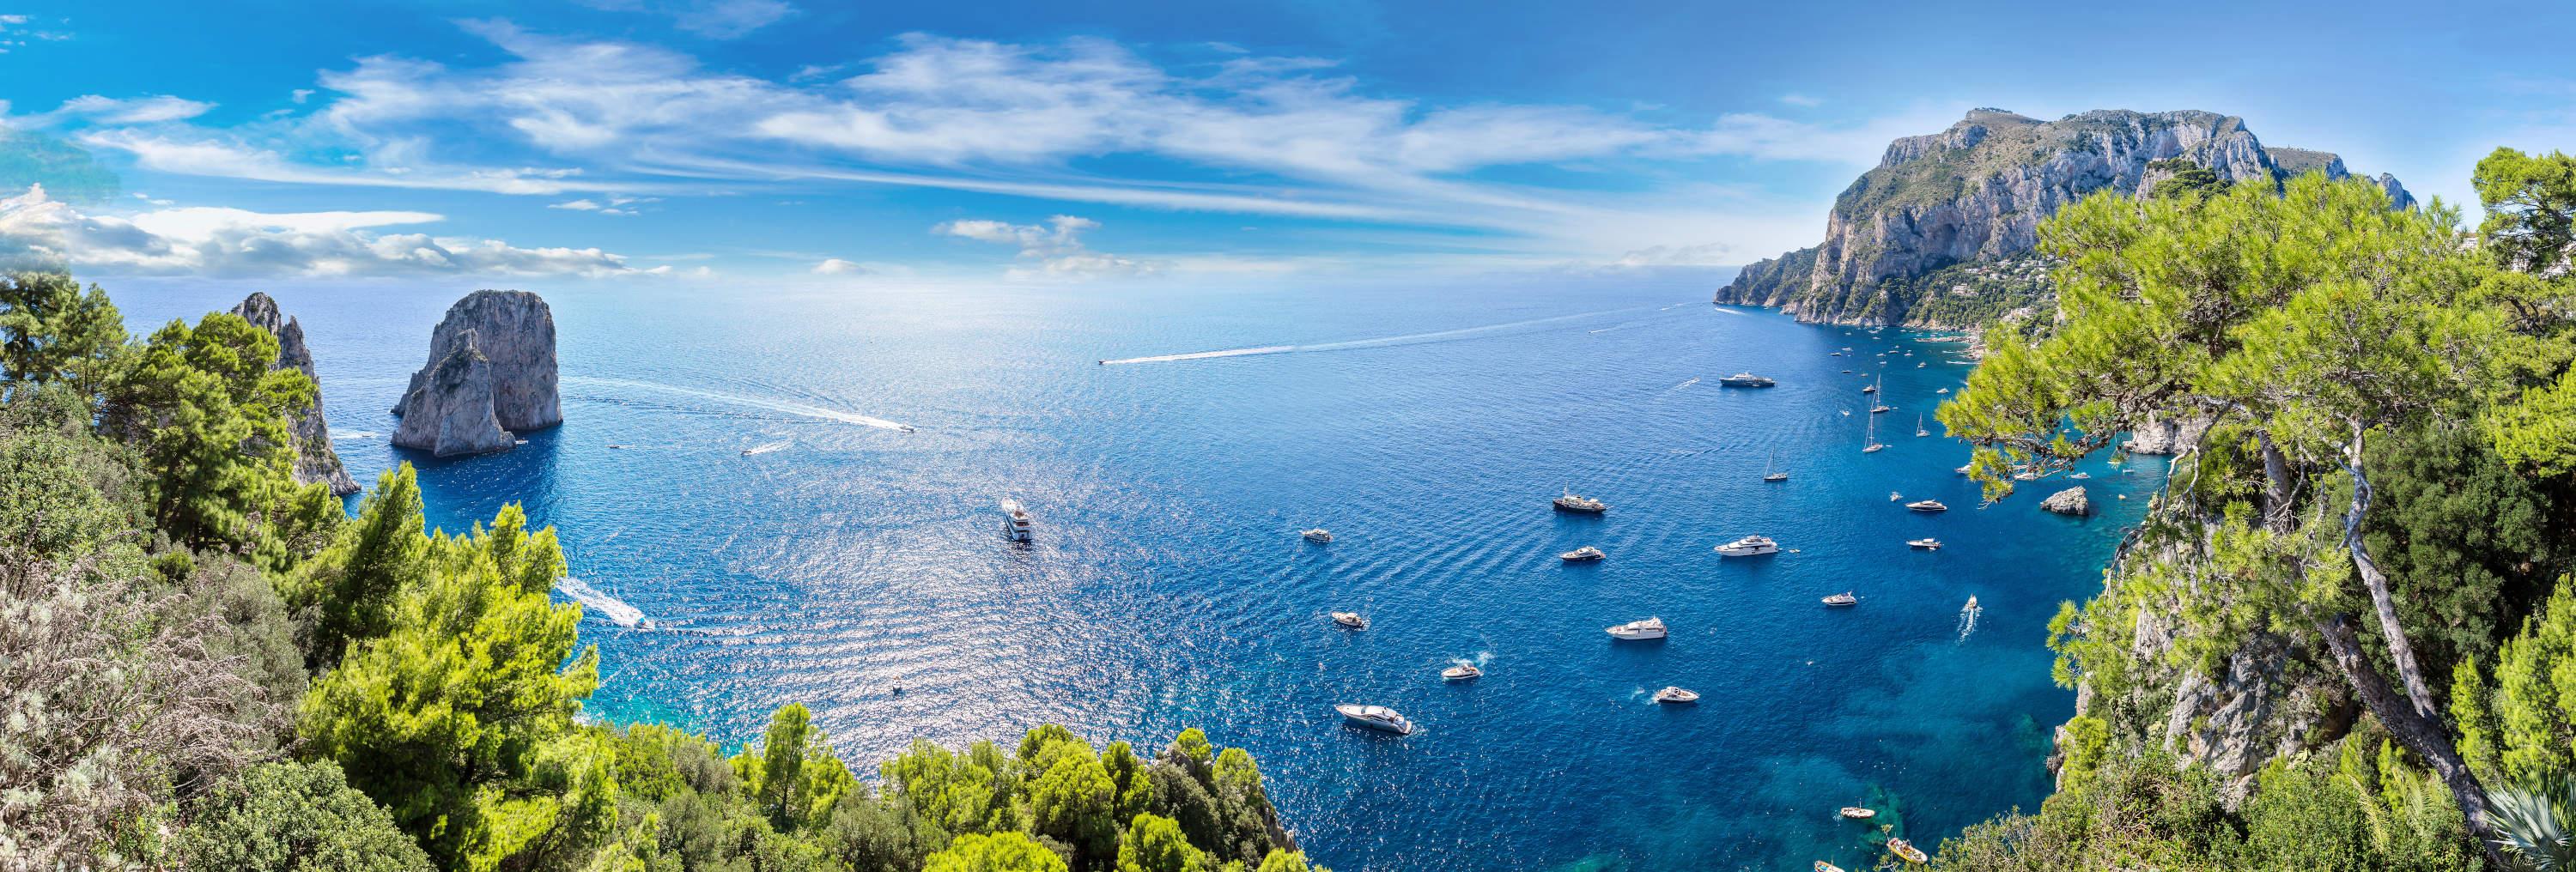 BGYB Destination : Amalfi Coast Suggested Itinerary